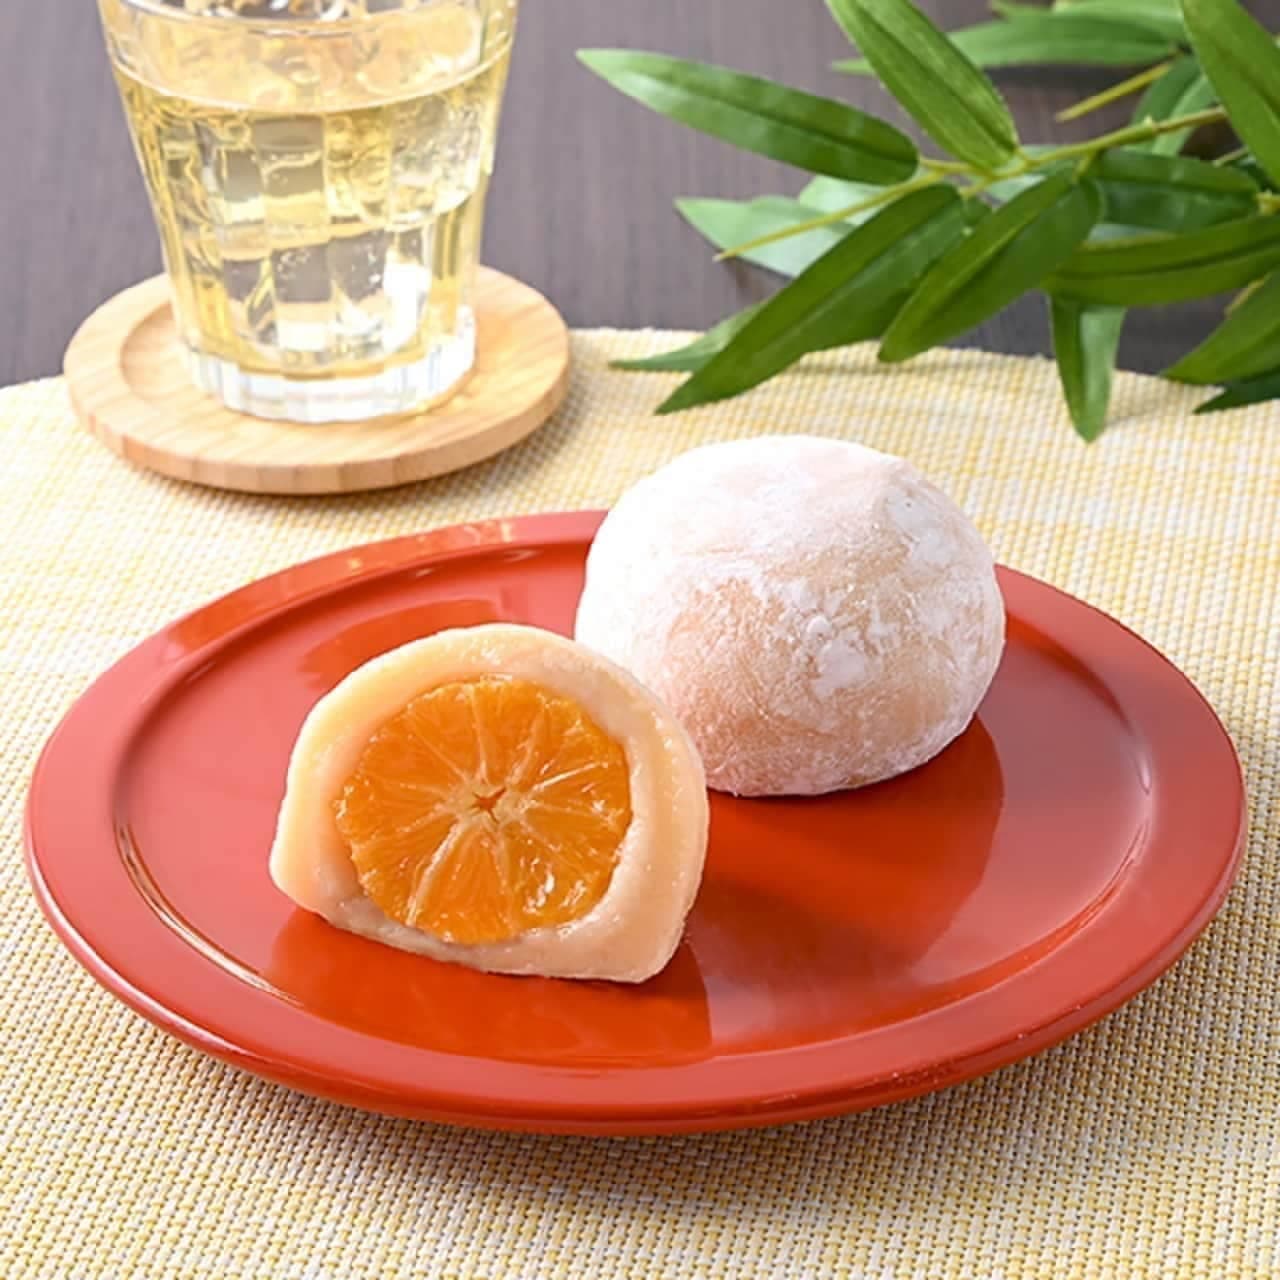 FamilyMart "Marugoto mikan" (whole citrus)